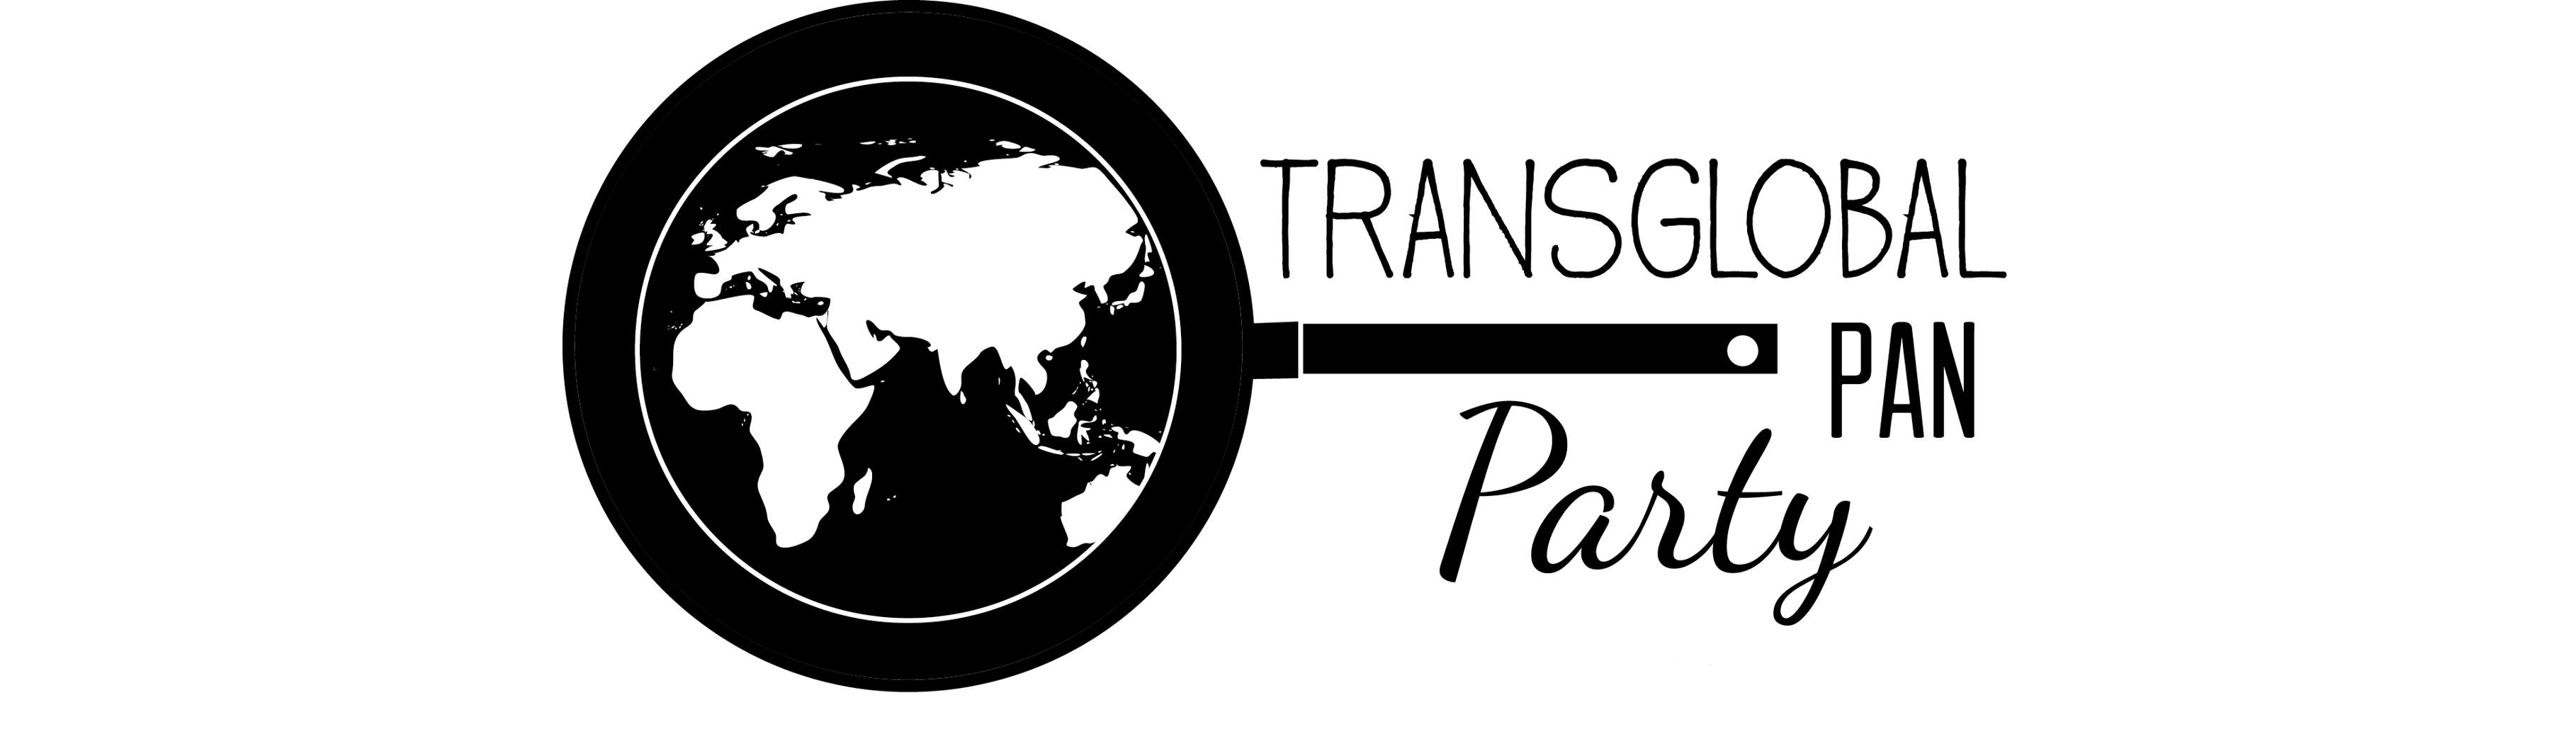 Transglobal Pan Party